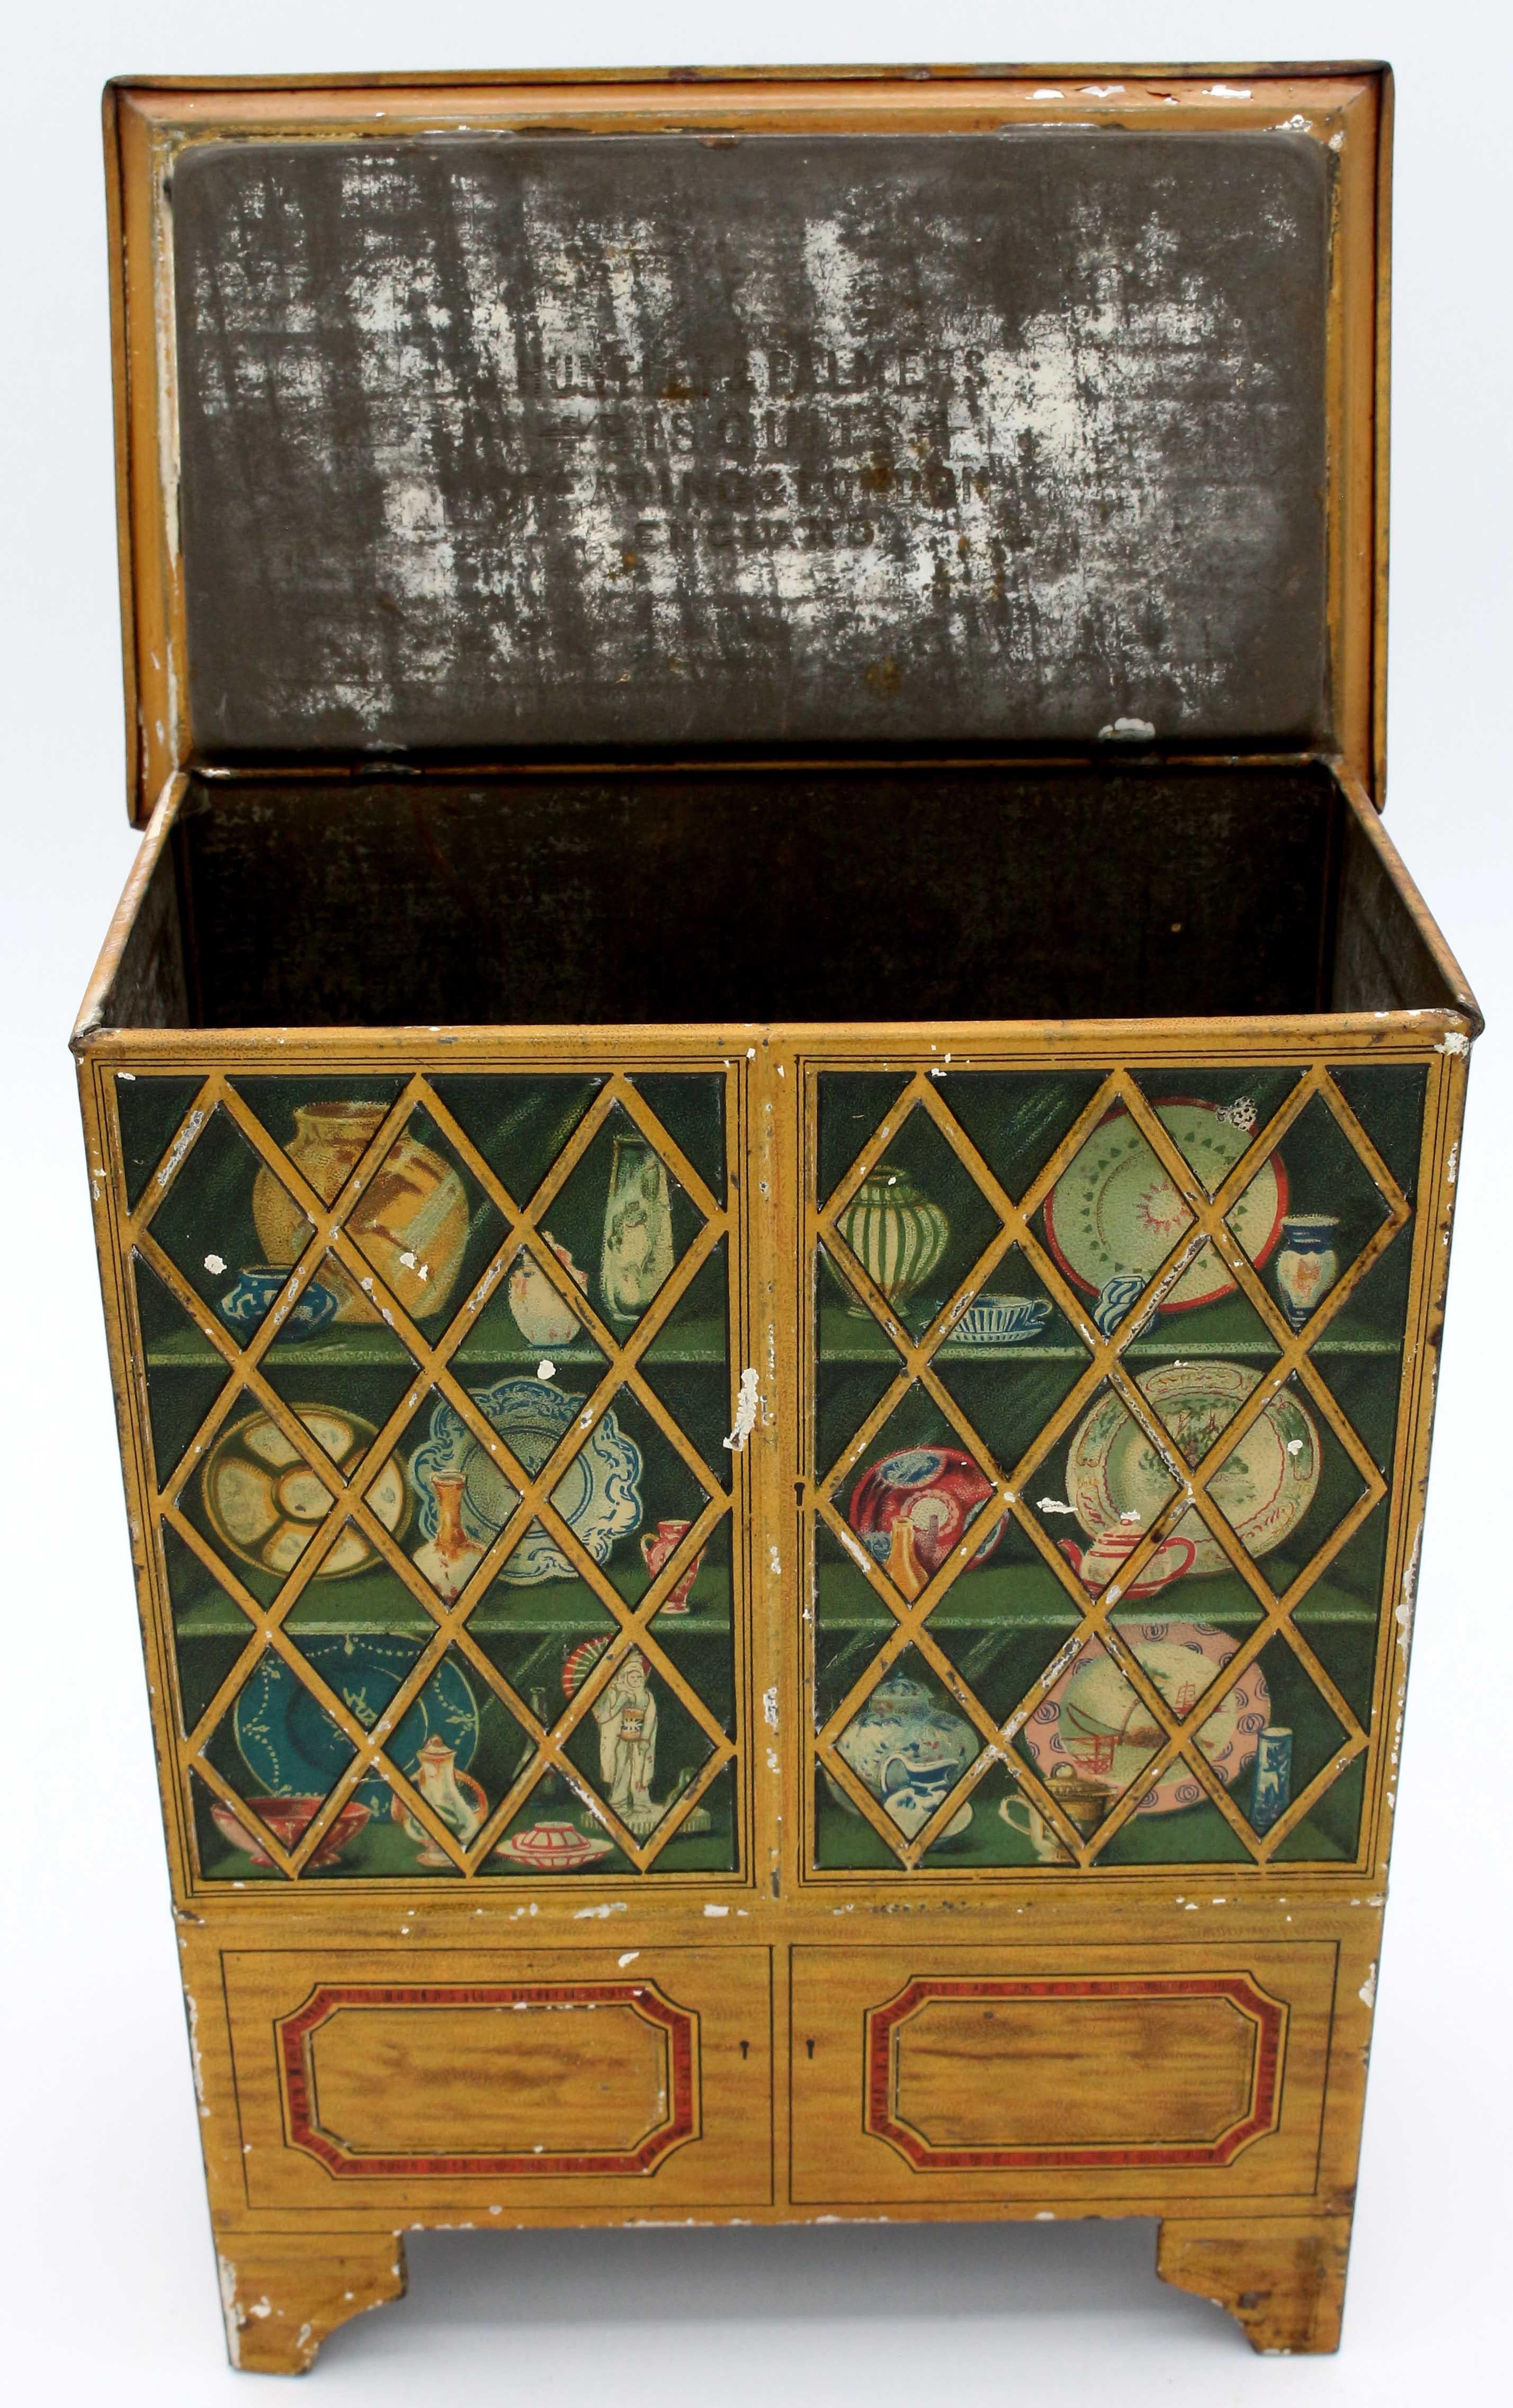 Georgian china press form biscuit tin box by Huntley & Palmers, 1912, English. Faux Hepplewhite design satinwood china press 